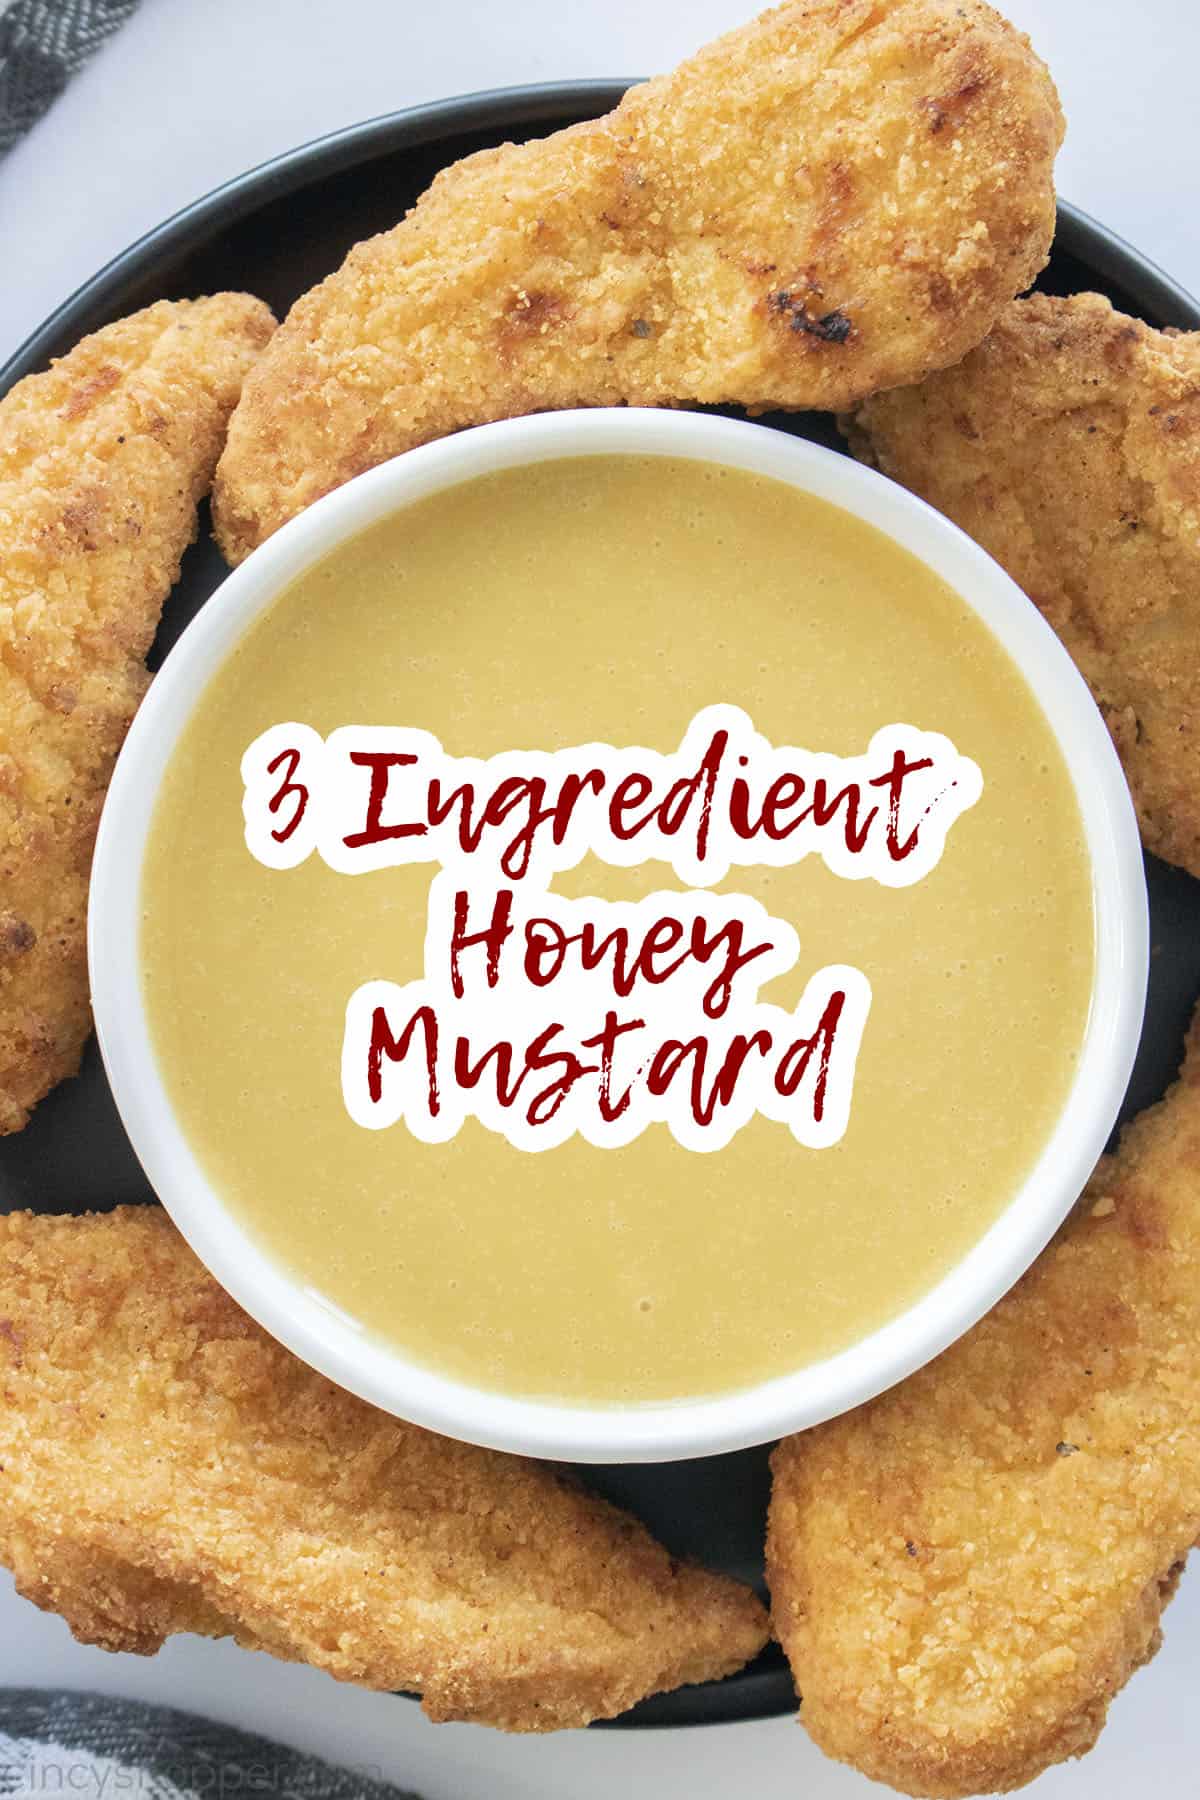 Text on image 3 Ingredient Honey Mustard